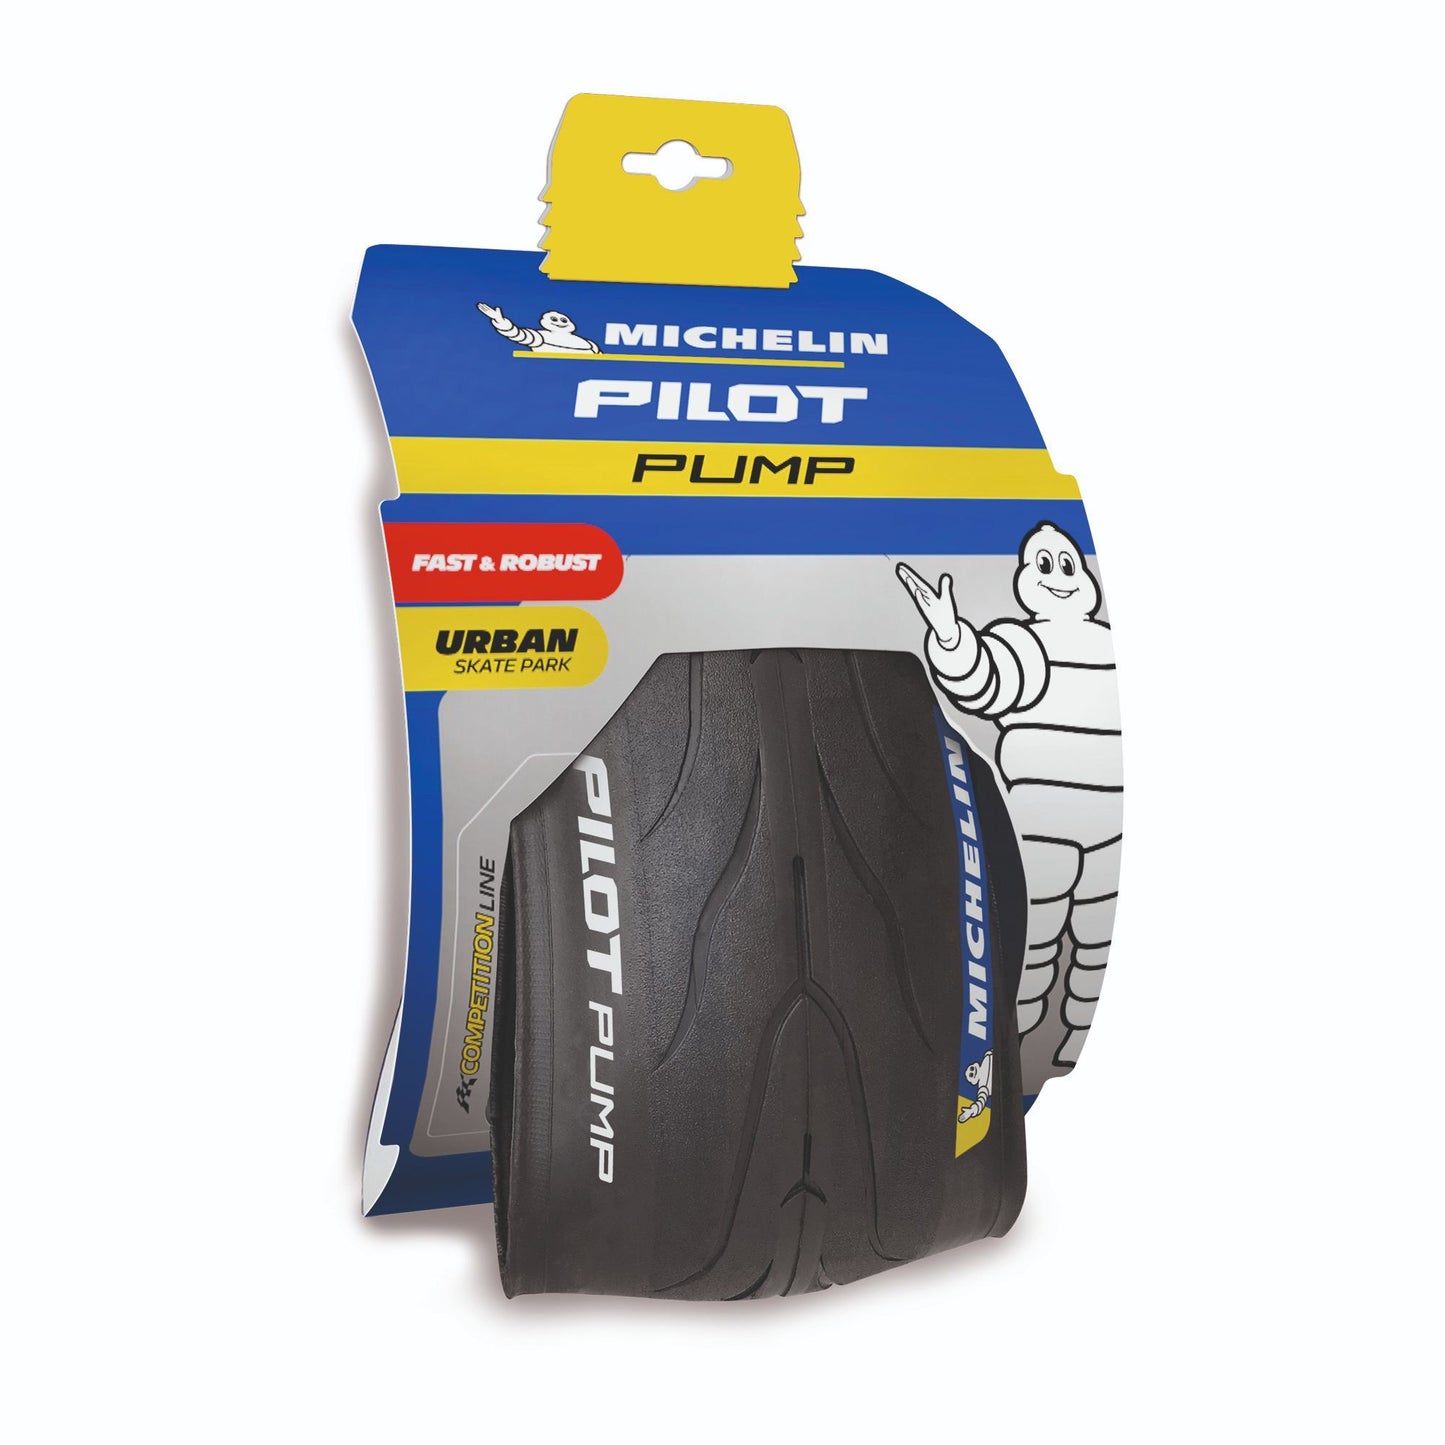 Michelin Pilot Pump Tyre - 26 x 2.30